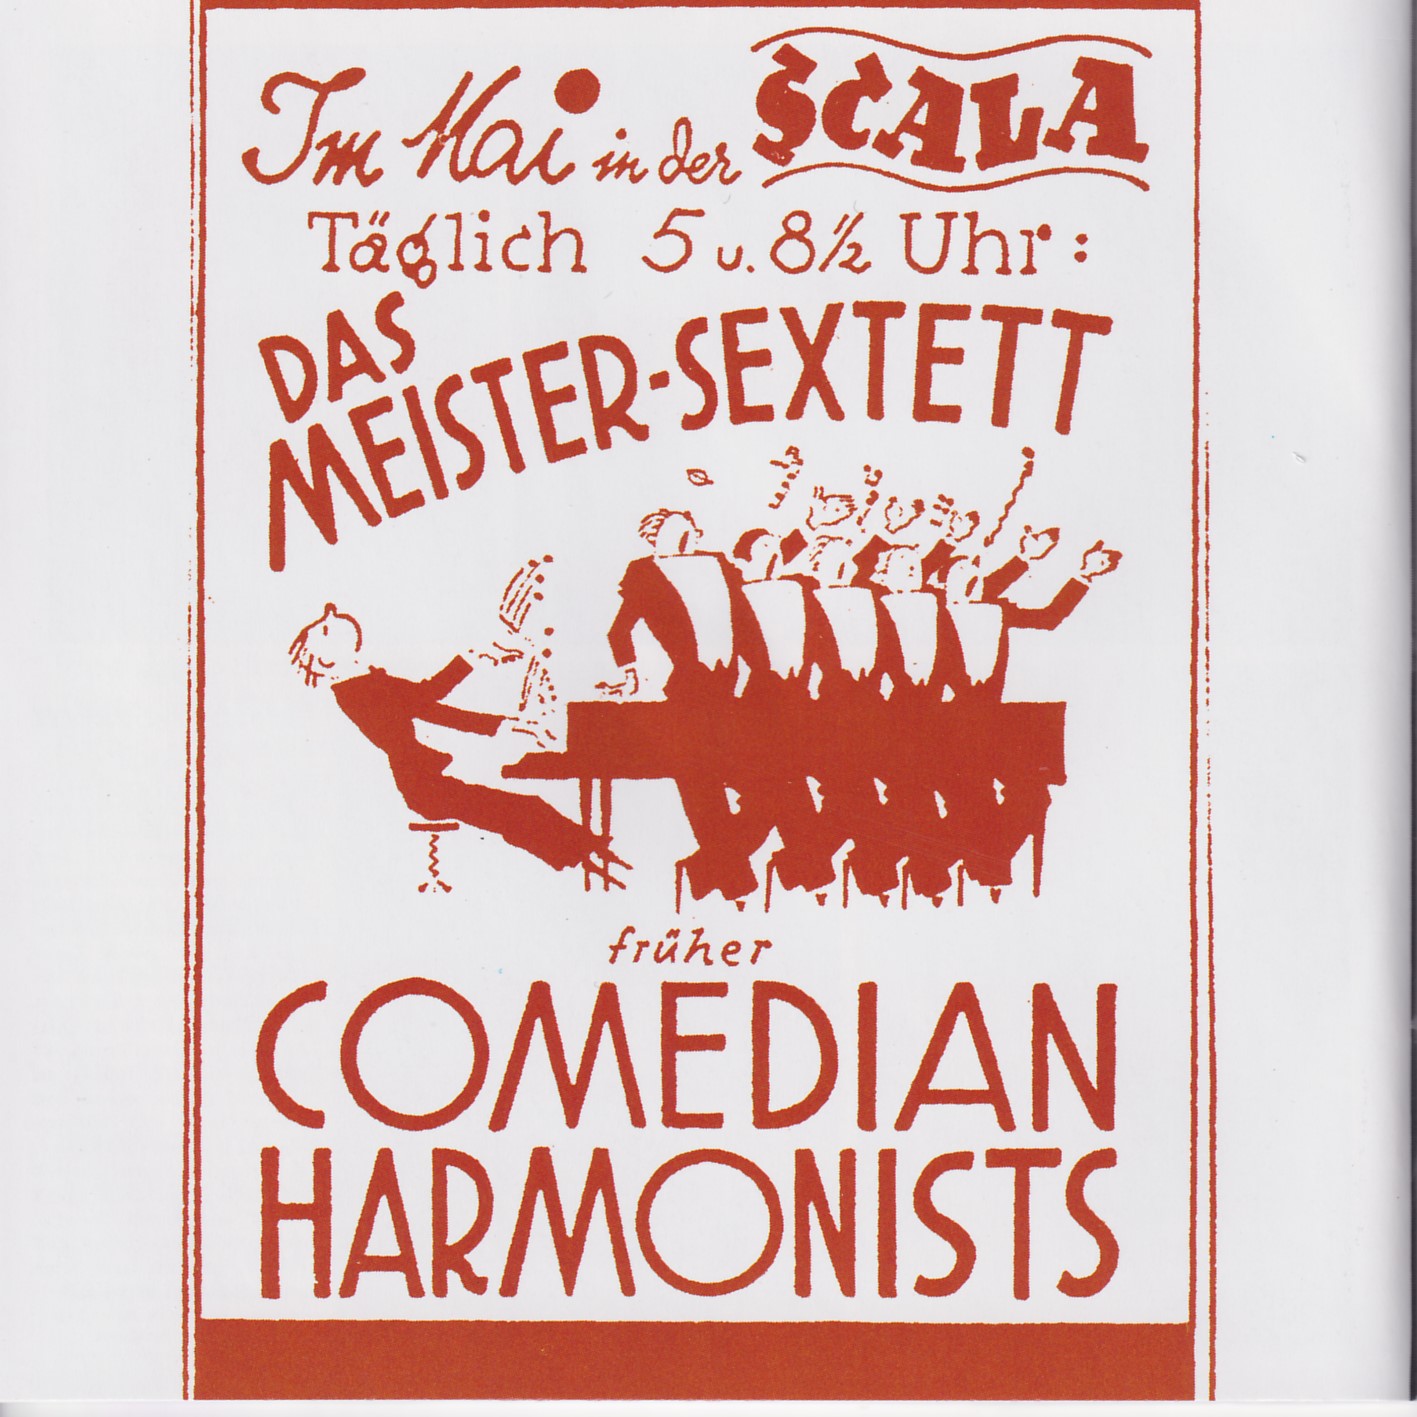 Meistersextett früher Comedian Harmonists